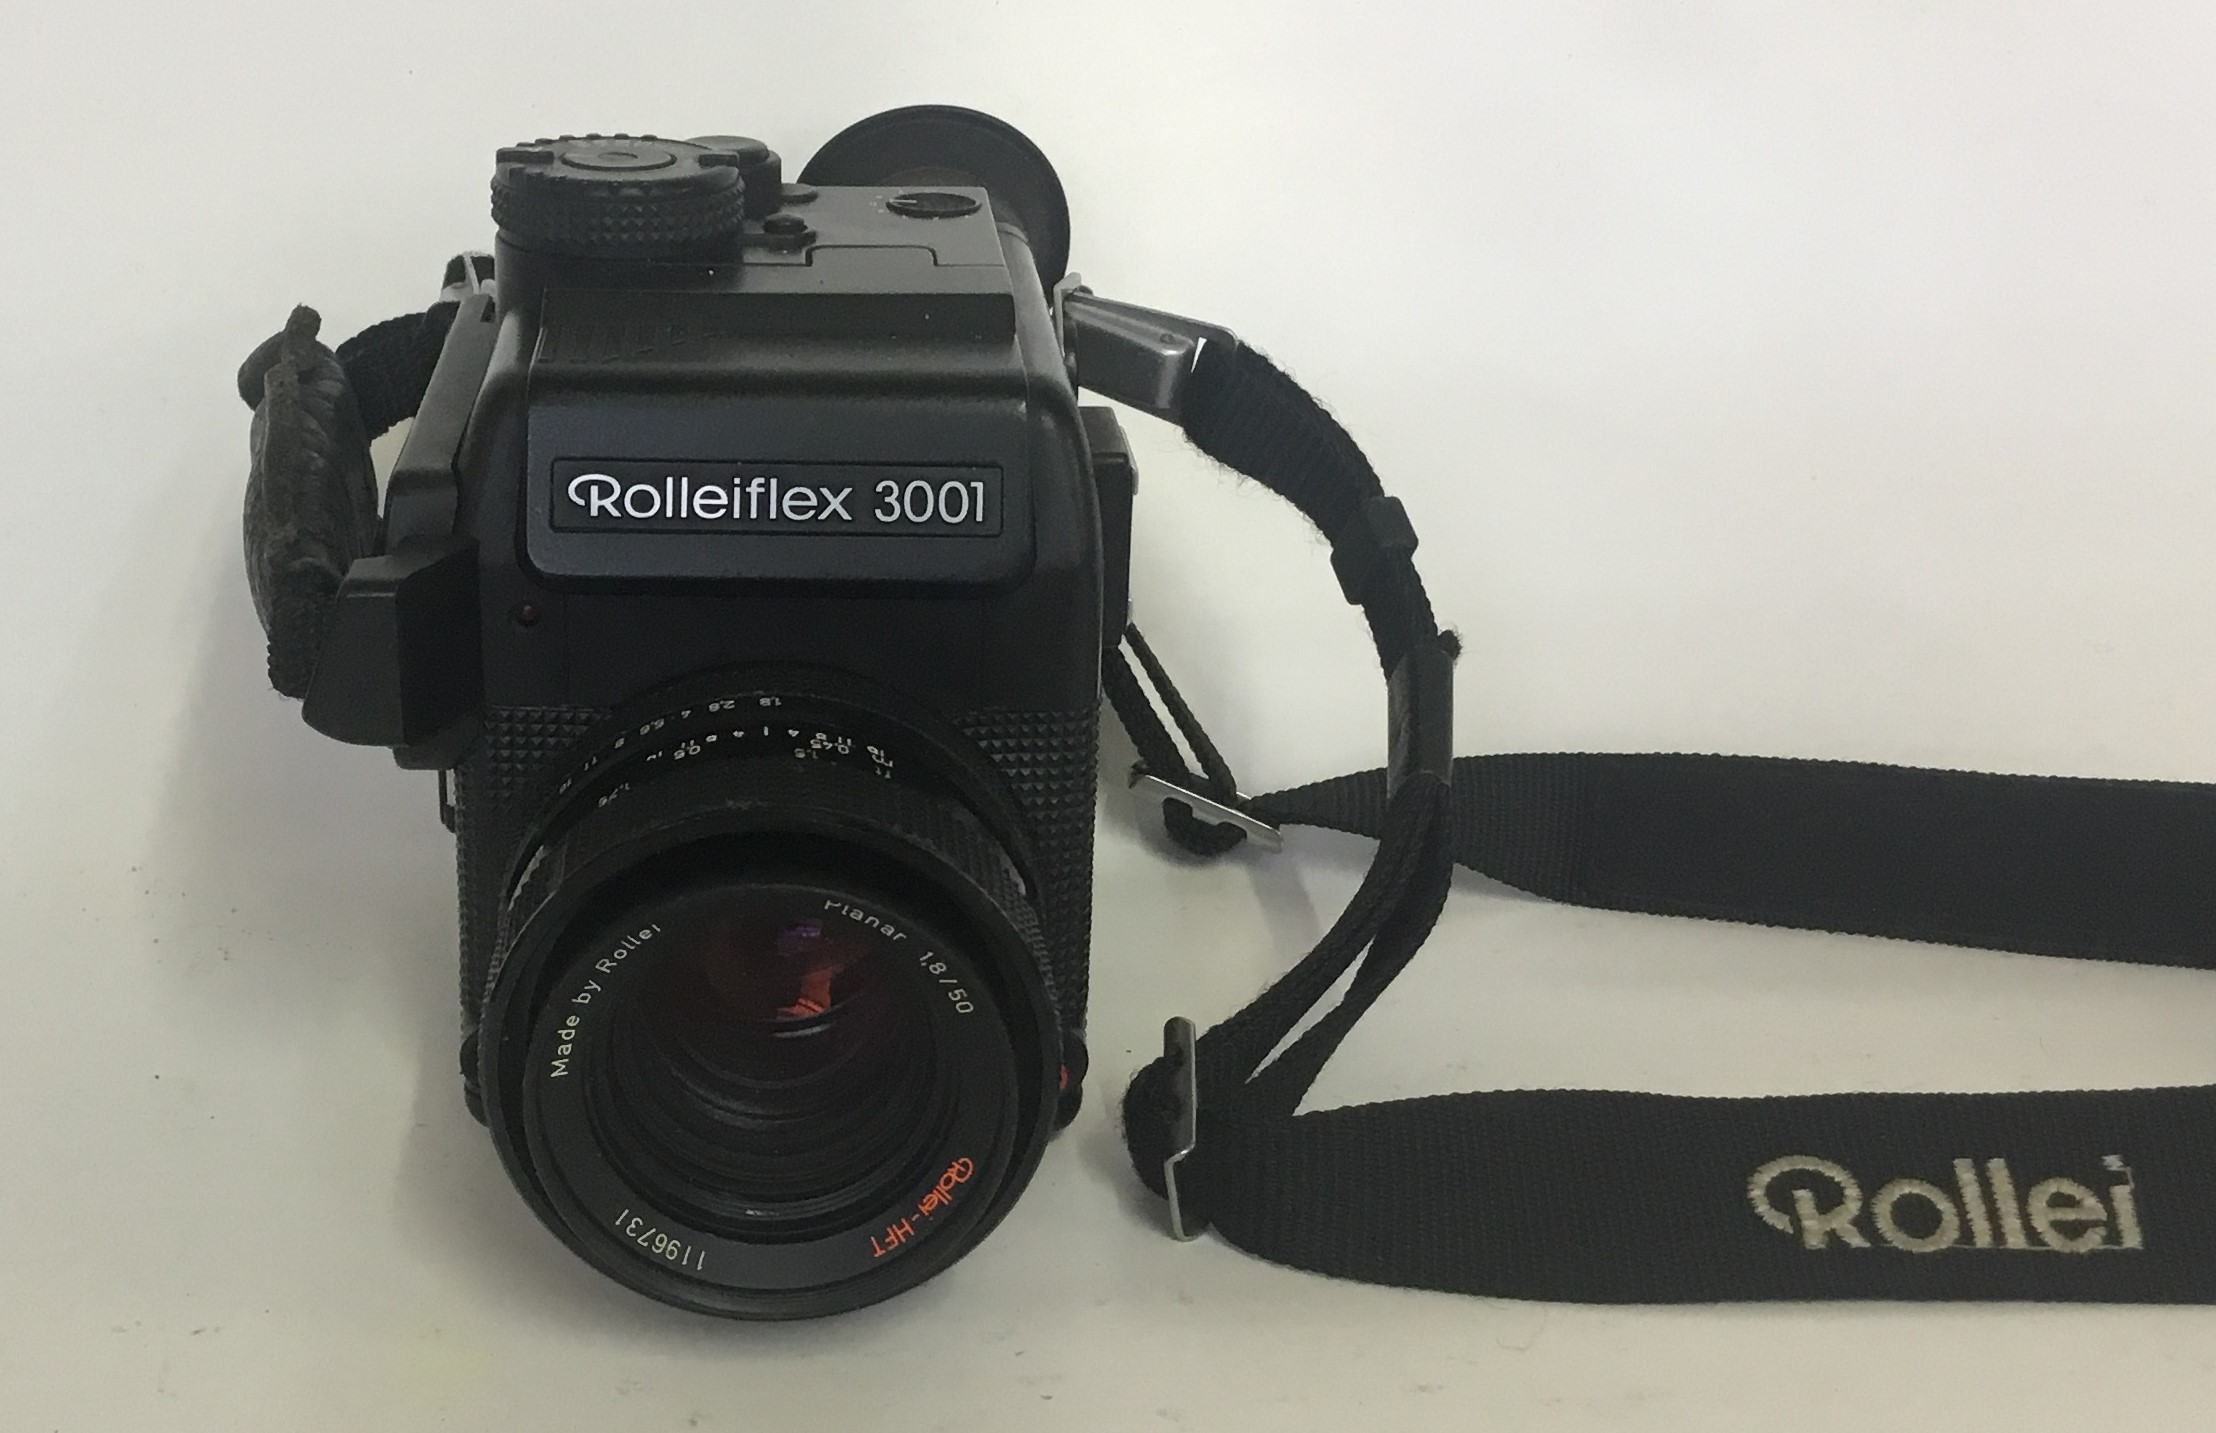 Rolleiflex 3001 Camera Serial No:101710033 Lens: 50mm Planar Additional Lenses: 35mm Distagon,